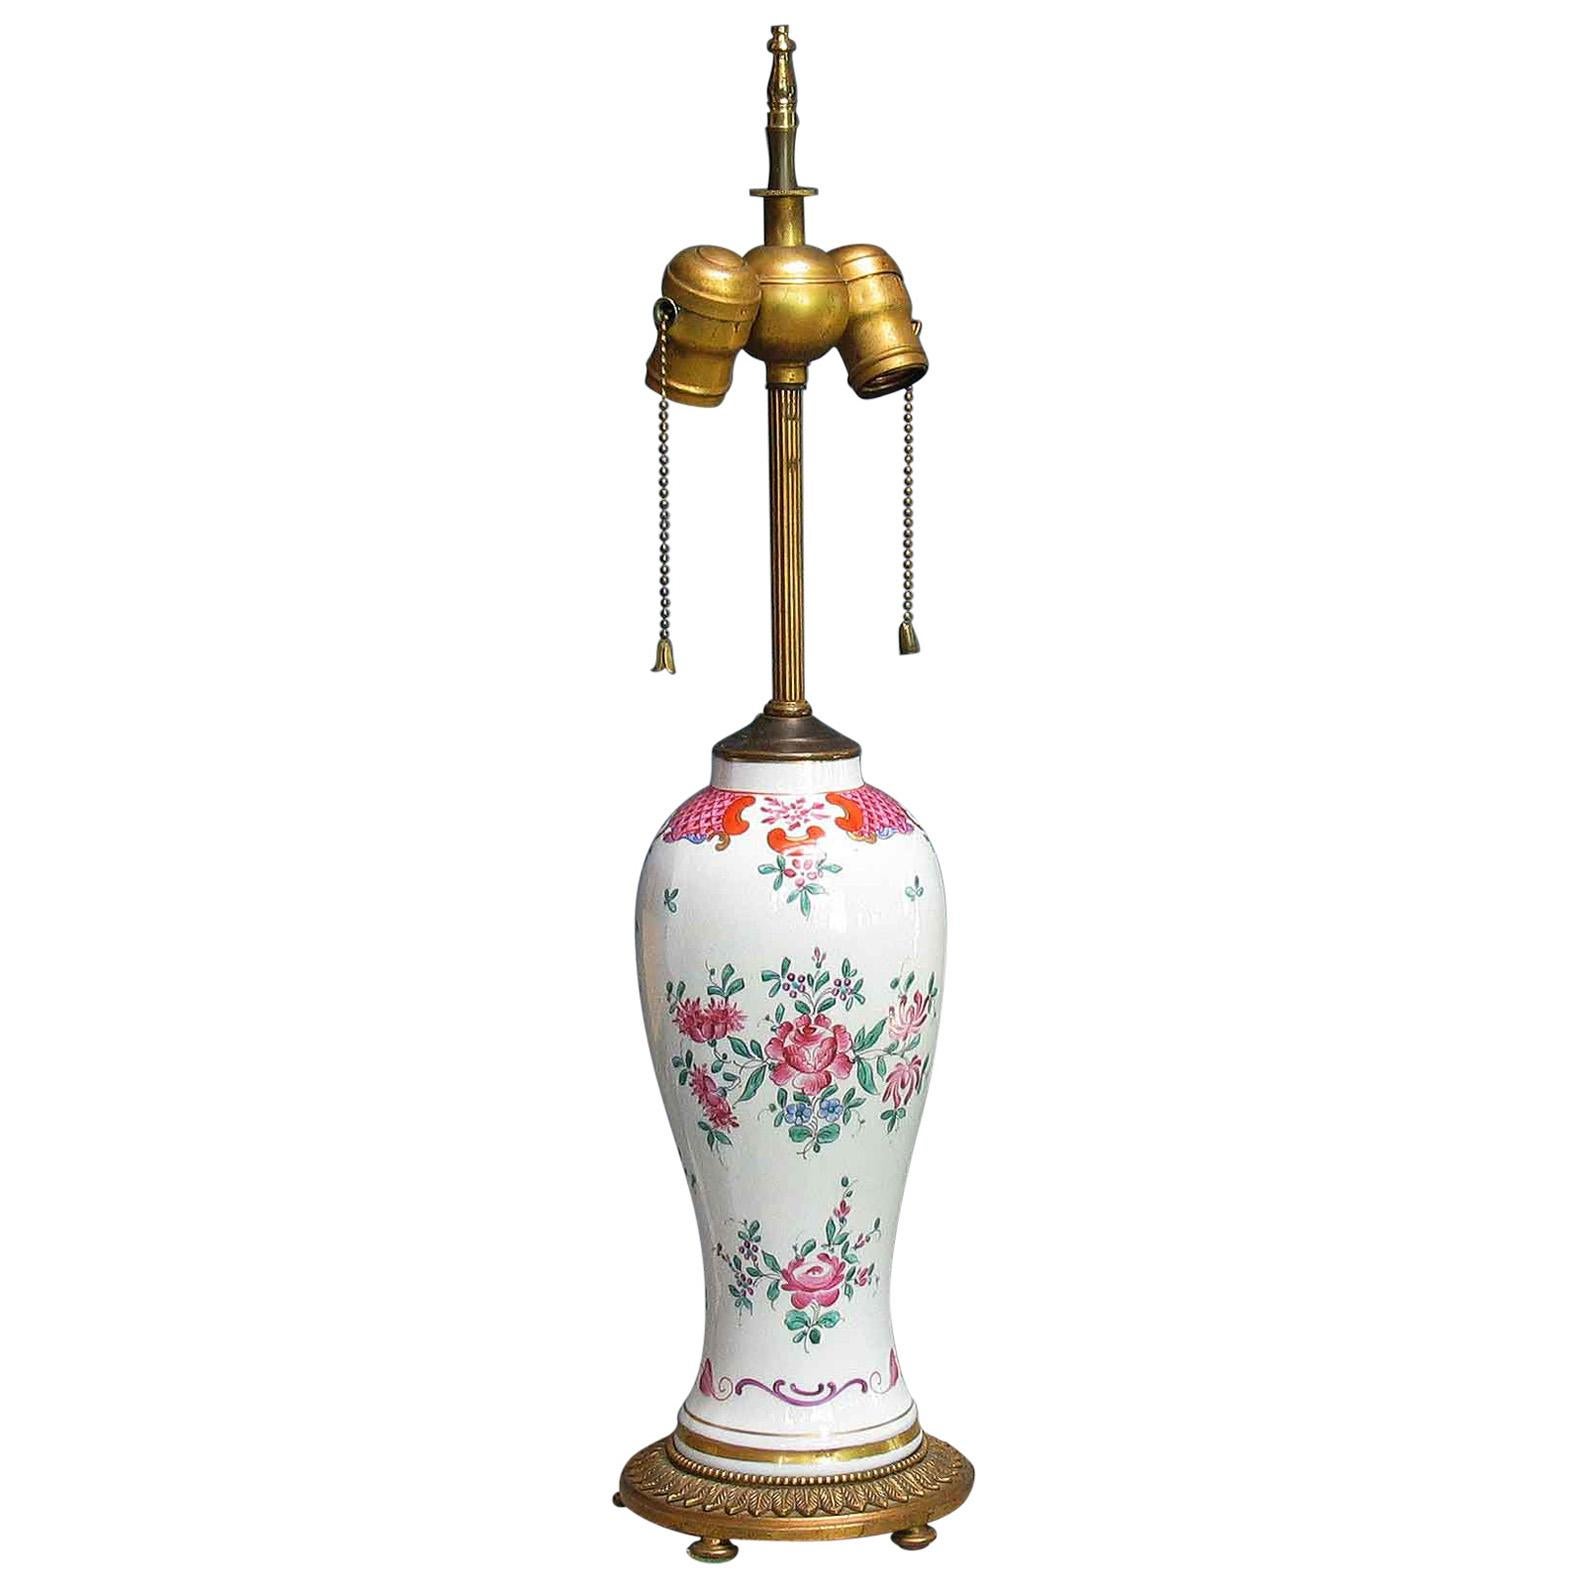 Porcelain Ormolu Mounted Chinese Lamp